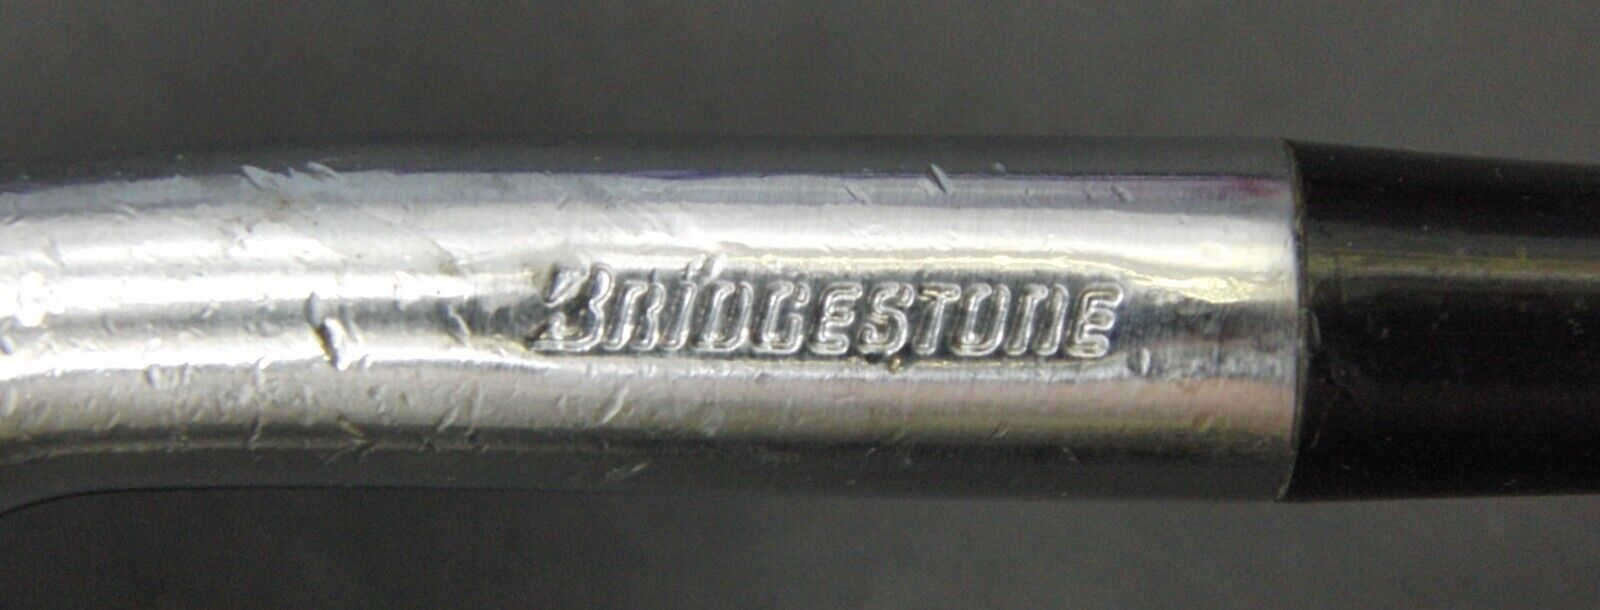 Bridgestone J'S Classical Edition Gap Wedge Regular Steel Shaft Iomic Grip